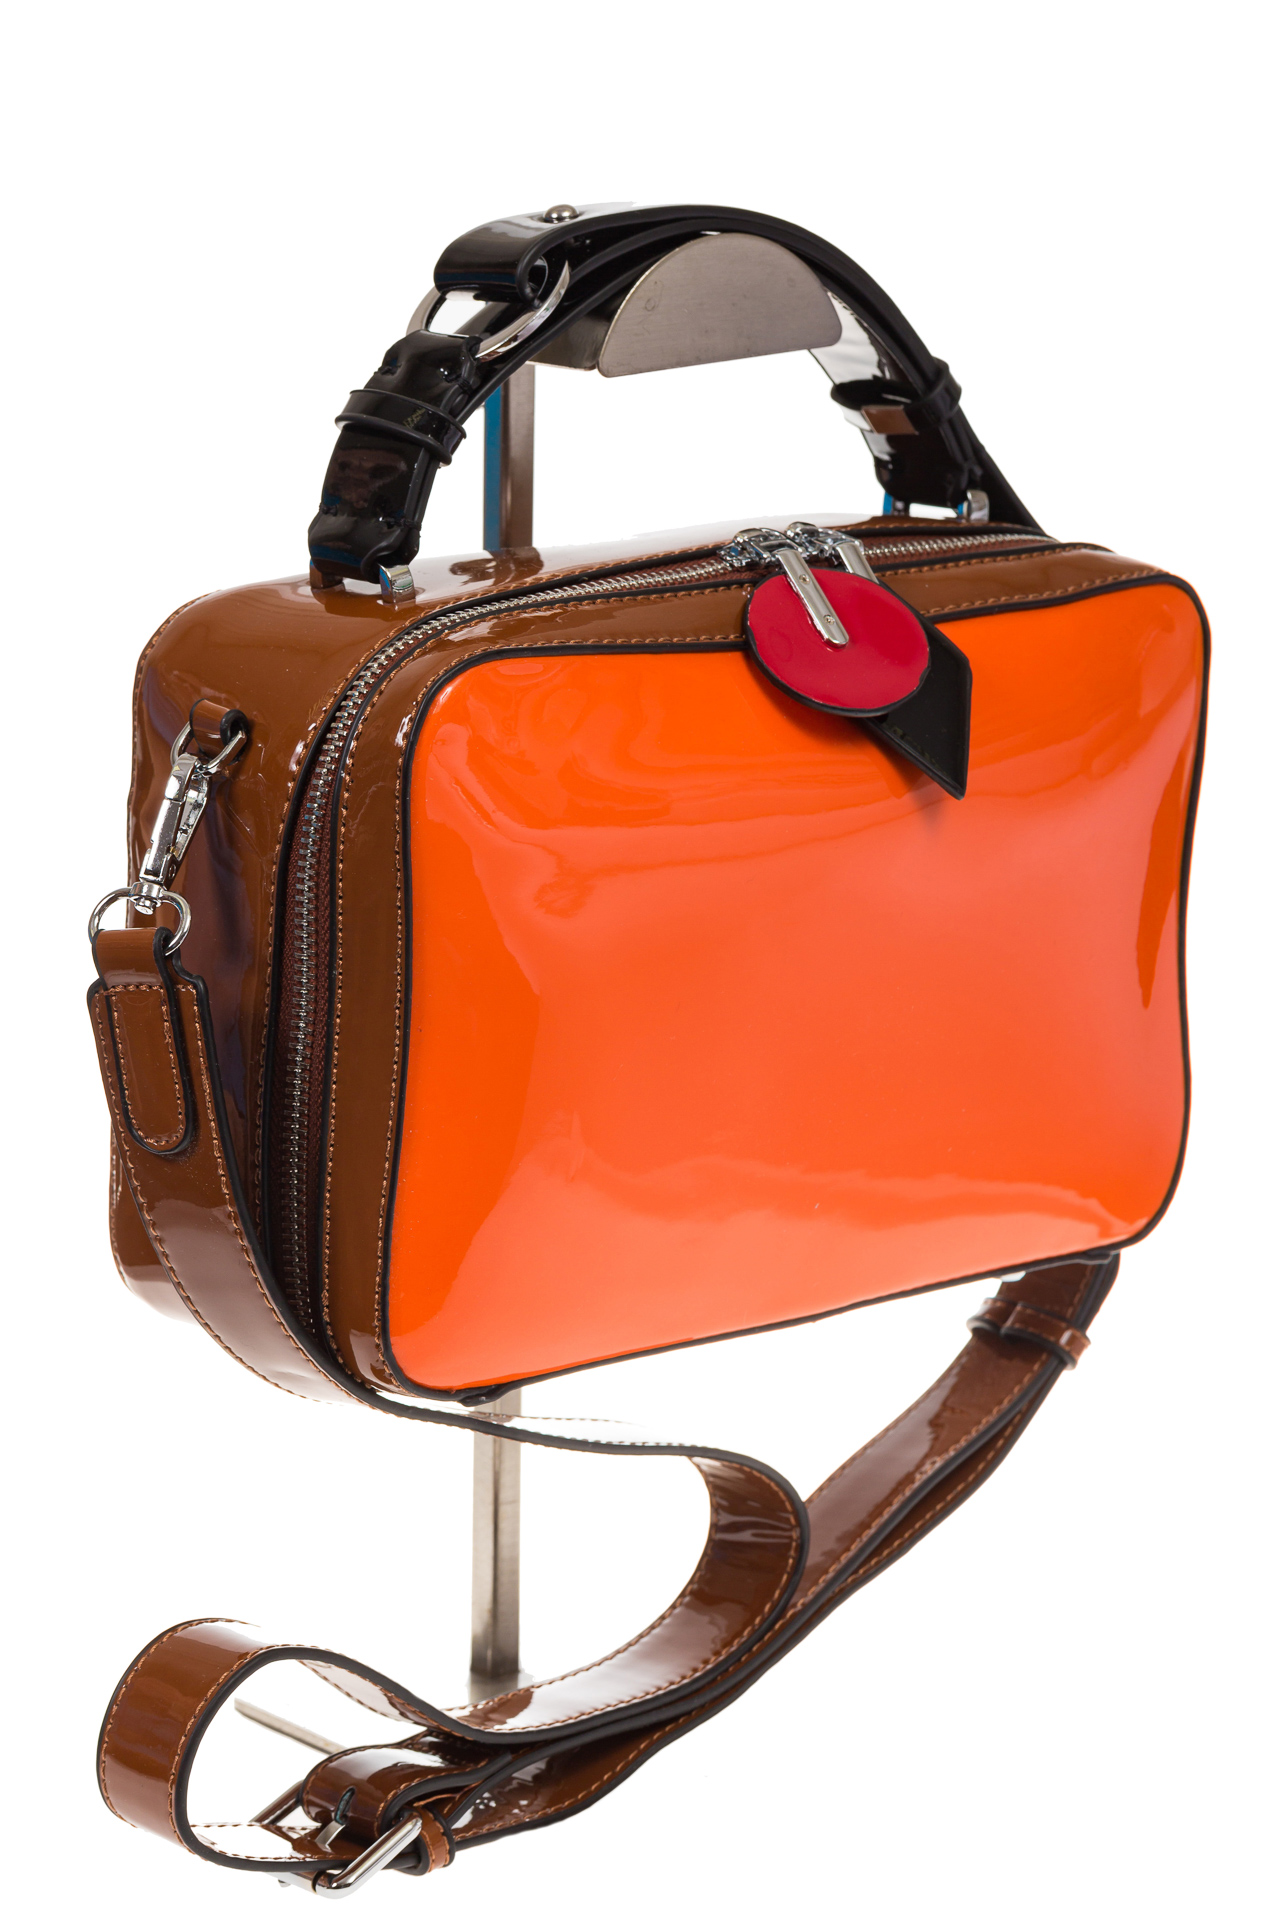 Сумка 4g. Оранжевая лакированная сумка. Сумка g. Сумка коричнево оранжевая. Красно оранжевая сумка.